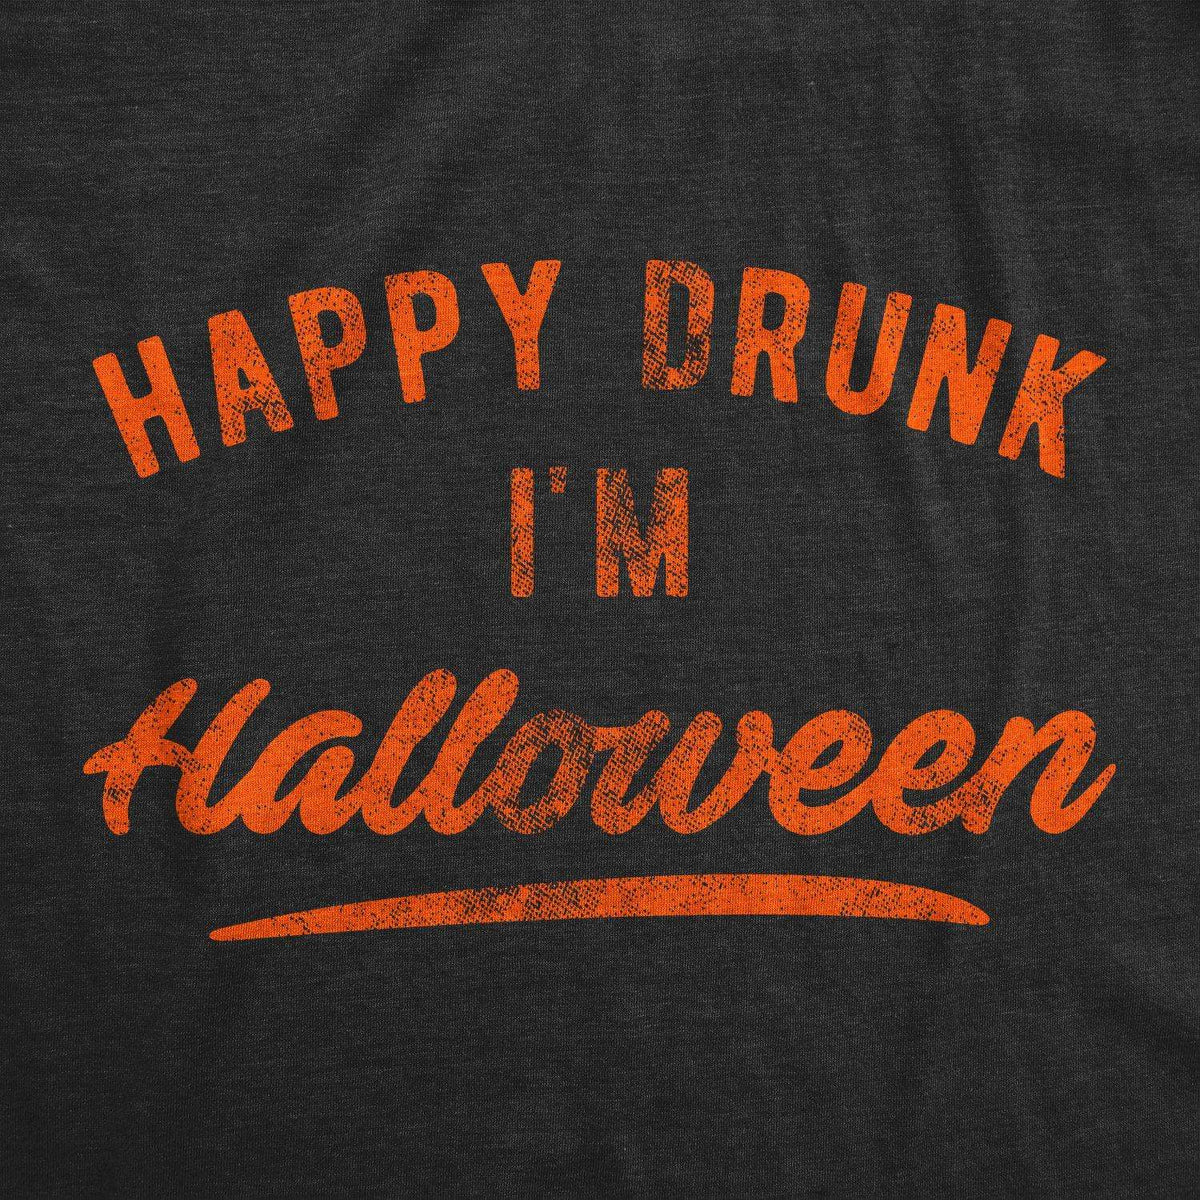 Happy Drunk I&#39;m Halloween Men&#39;s Tshirt - Crazy Dog T-Shirts